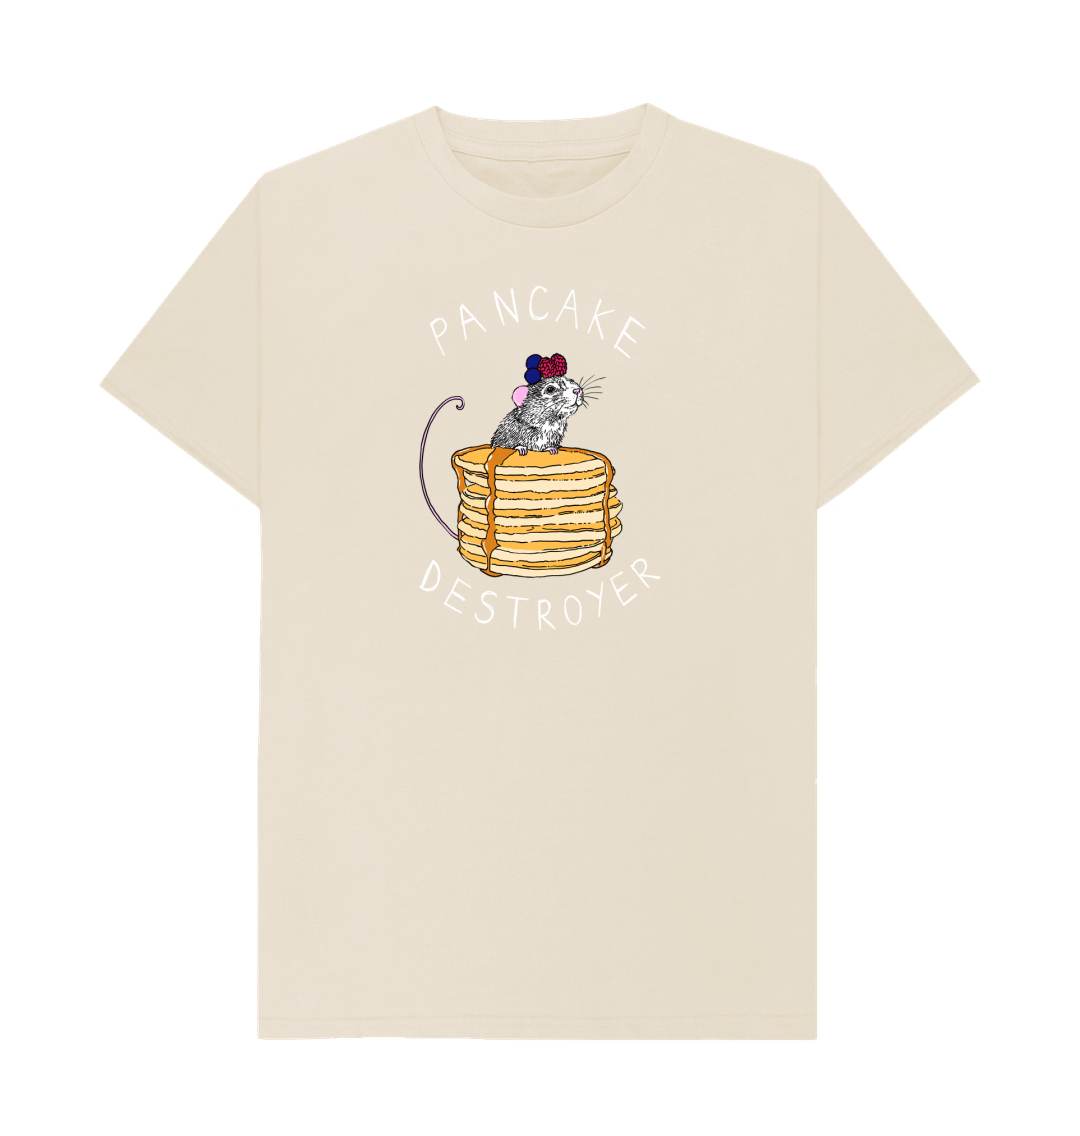 Oat 'Pancake Destroyer' Men's T-shirt